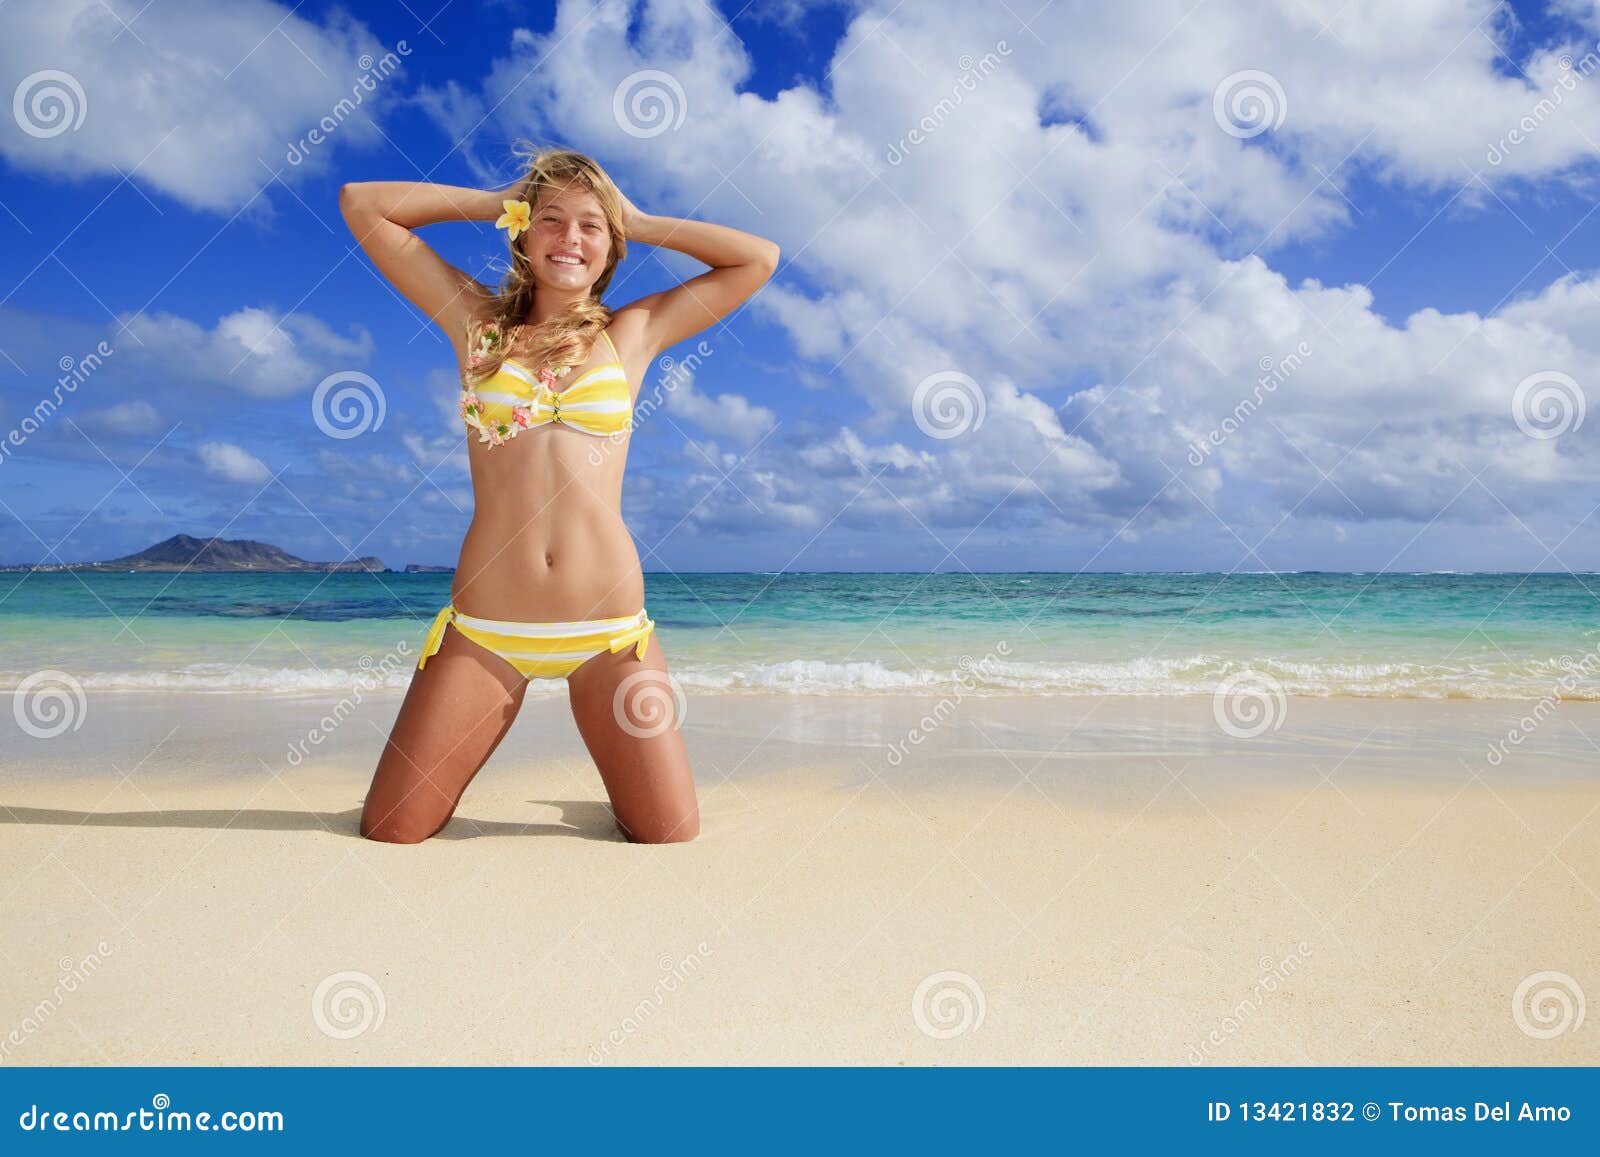 amateur wife blowjob beach